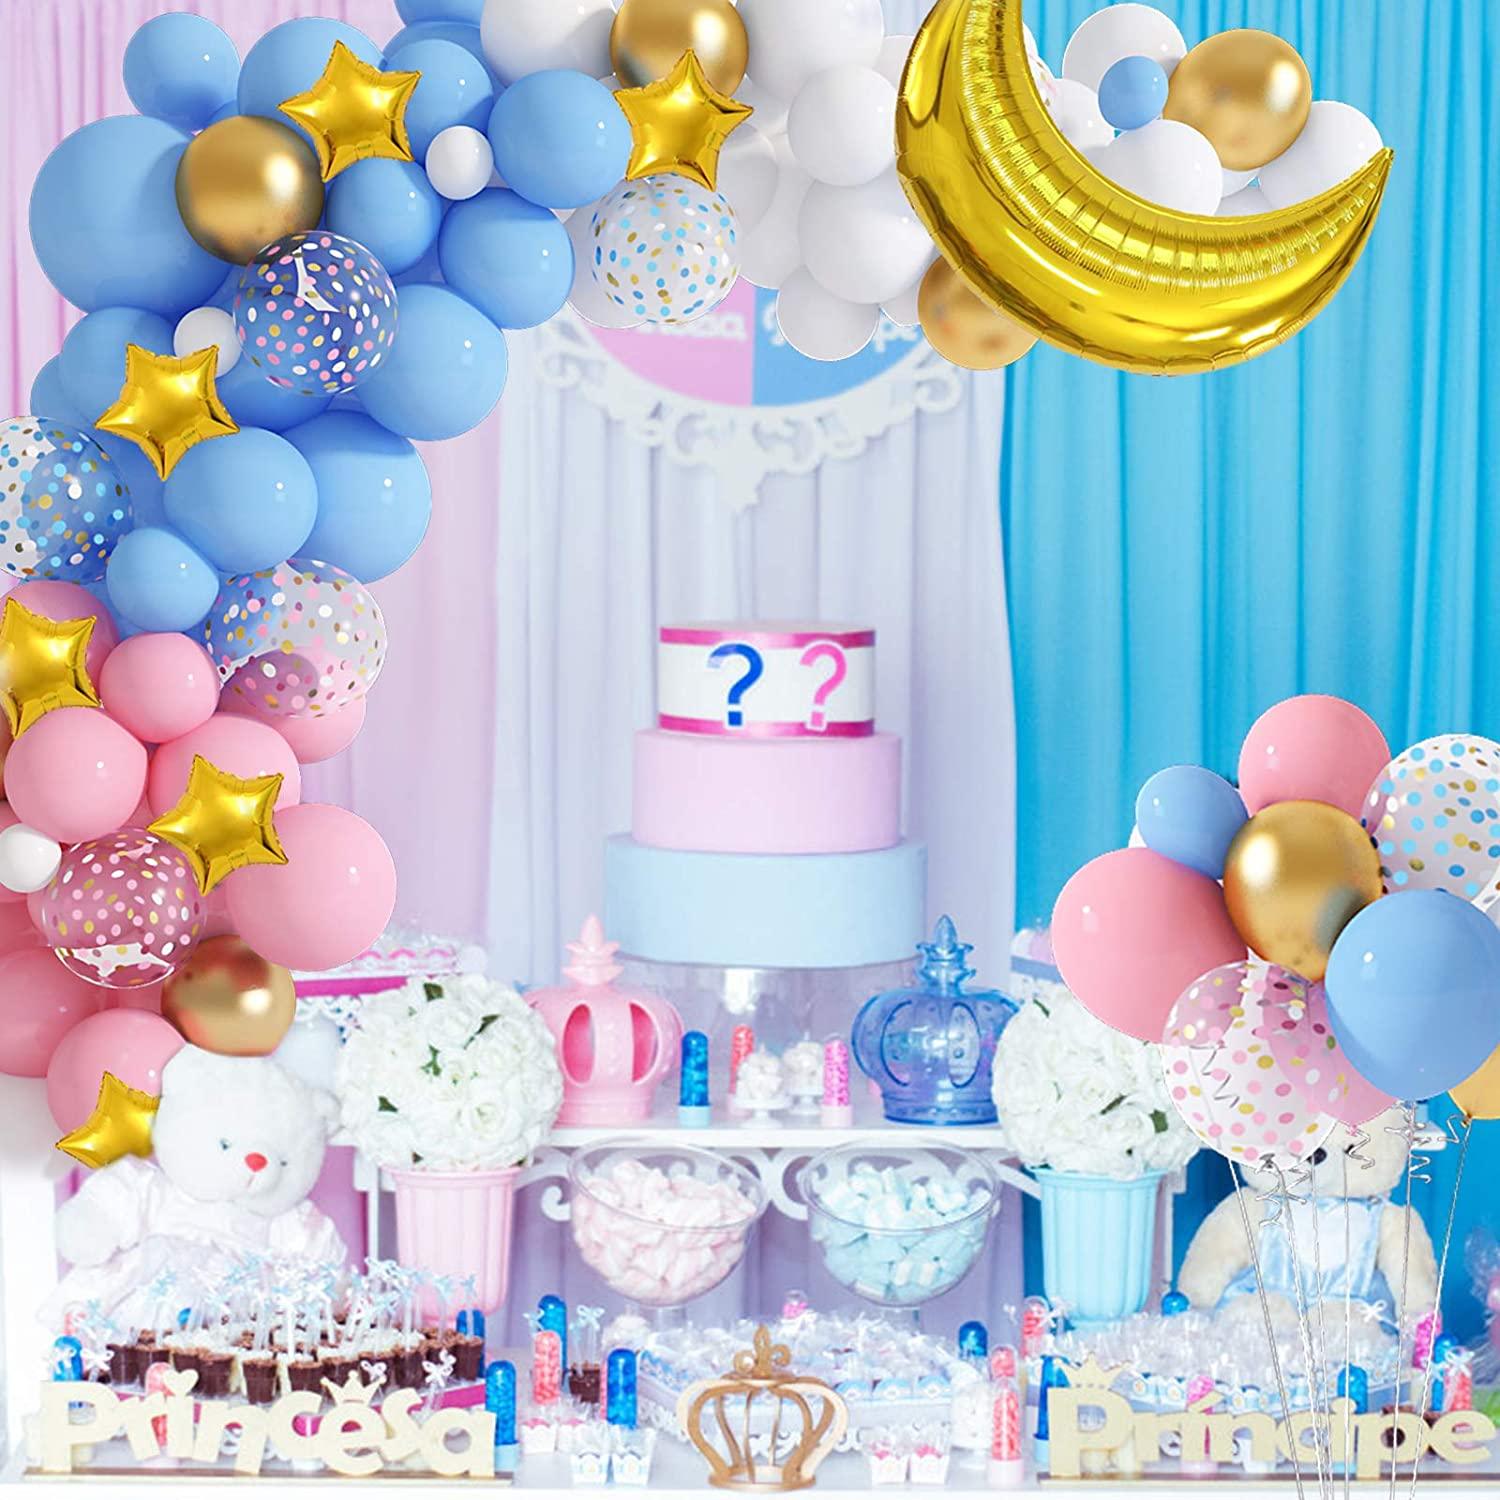 Gender Reveal Kitgender Reveal Party Kit - Baby Shower Decorations With  Banner, Balloons, Cake Topper